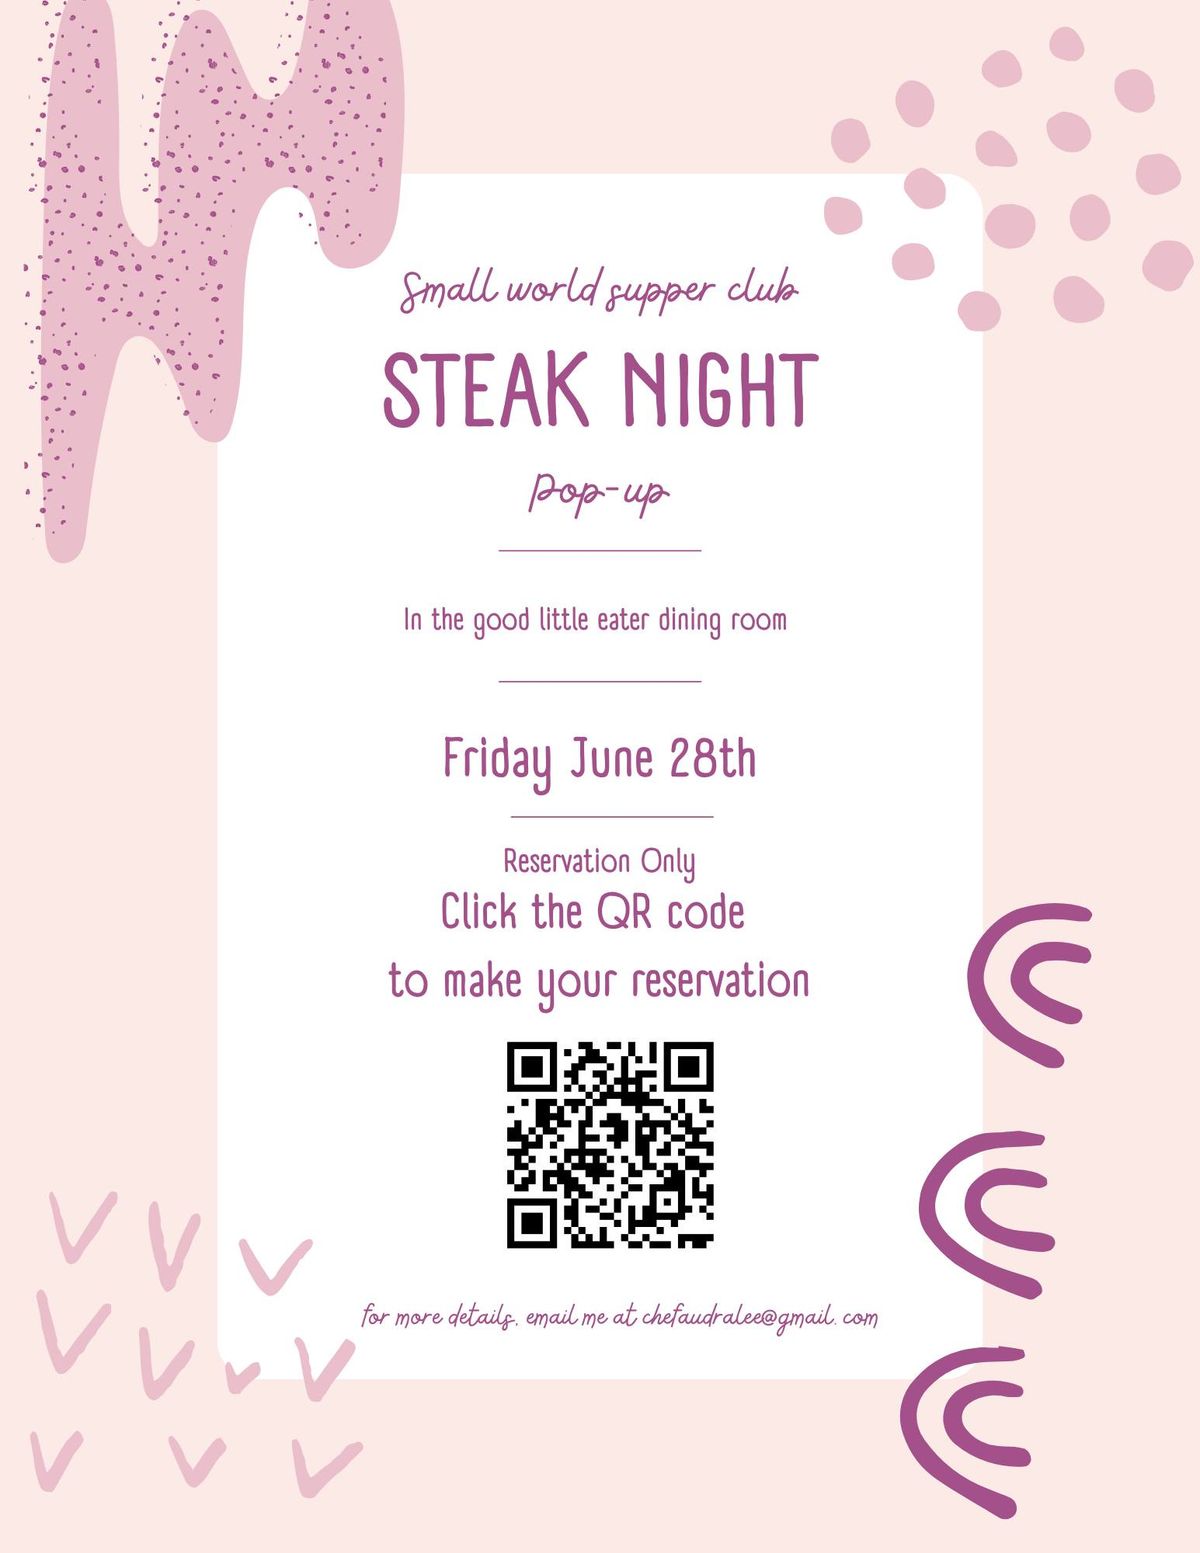 Steak Night at SWSC